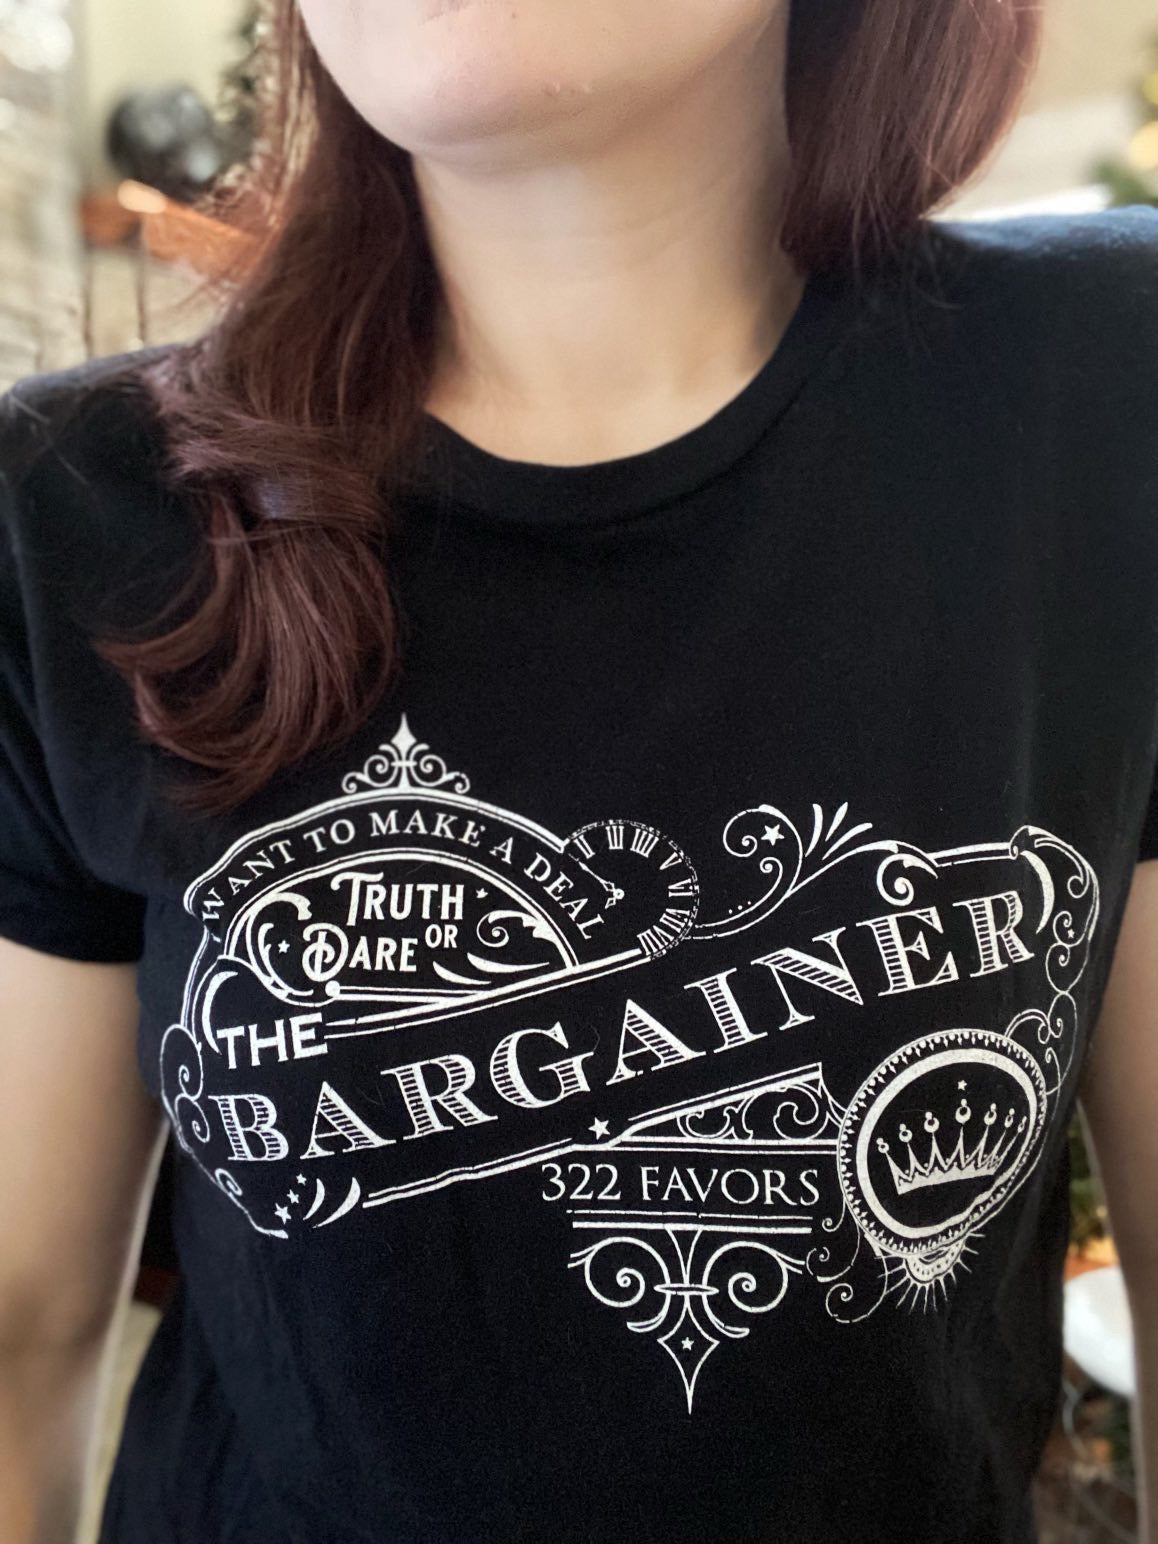 Laura Thalassa - The Bargainer T-Shirt - Novel Grounds